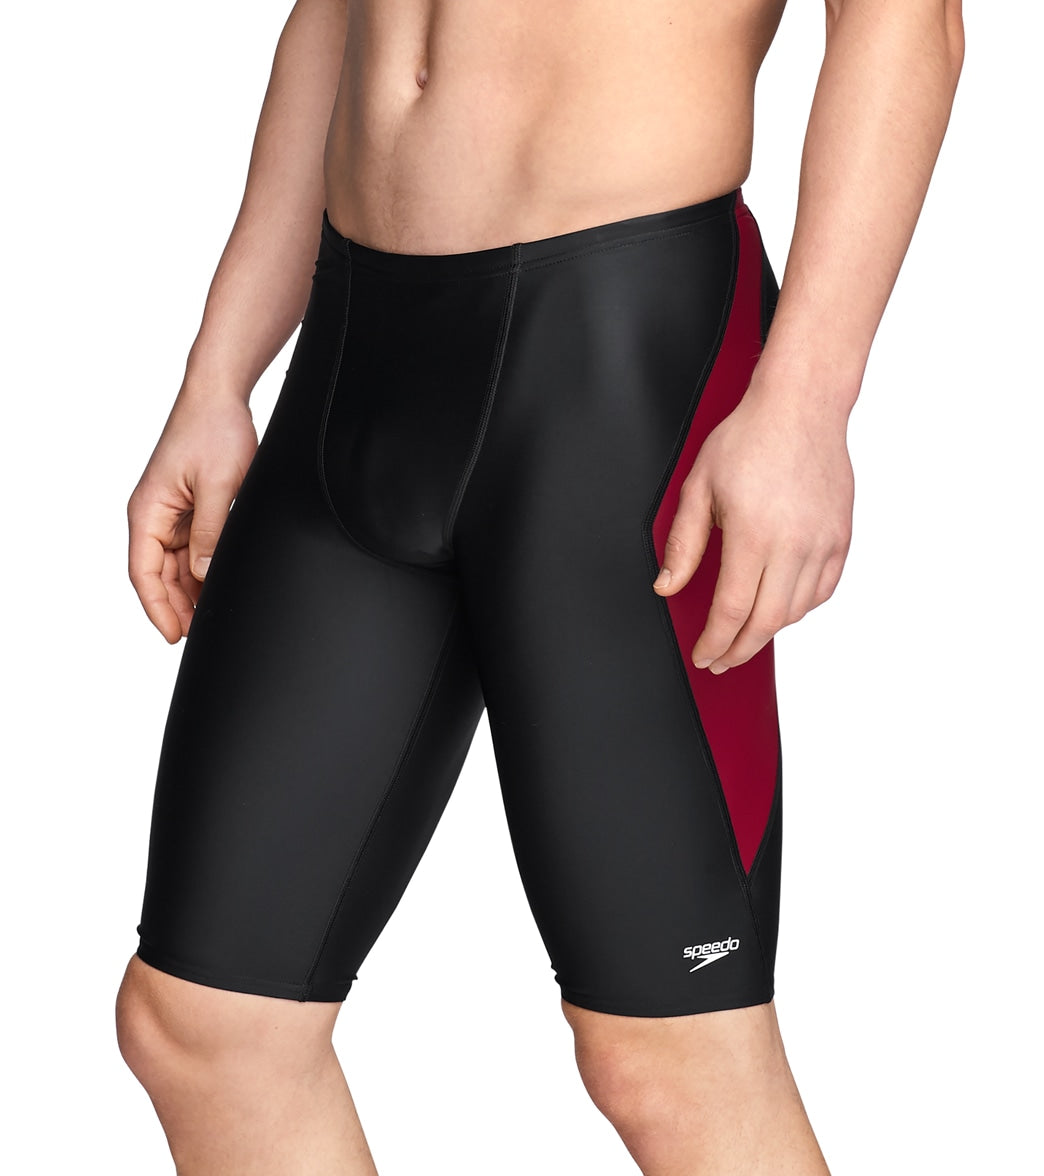 Speedo Men's Powerflex Eco Tone Setter Jammer Swimsuit - Black/Maroon 22 - Swimoutlet.com